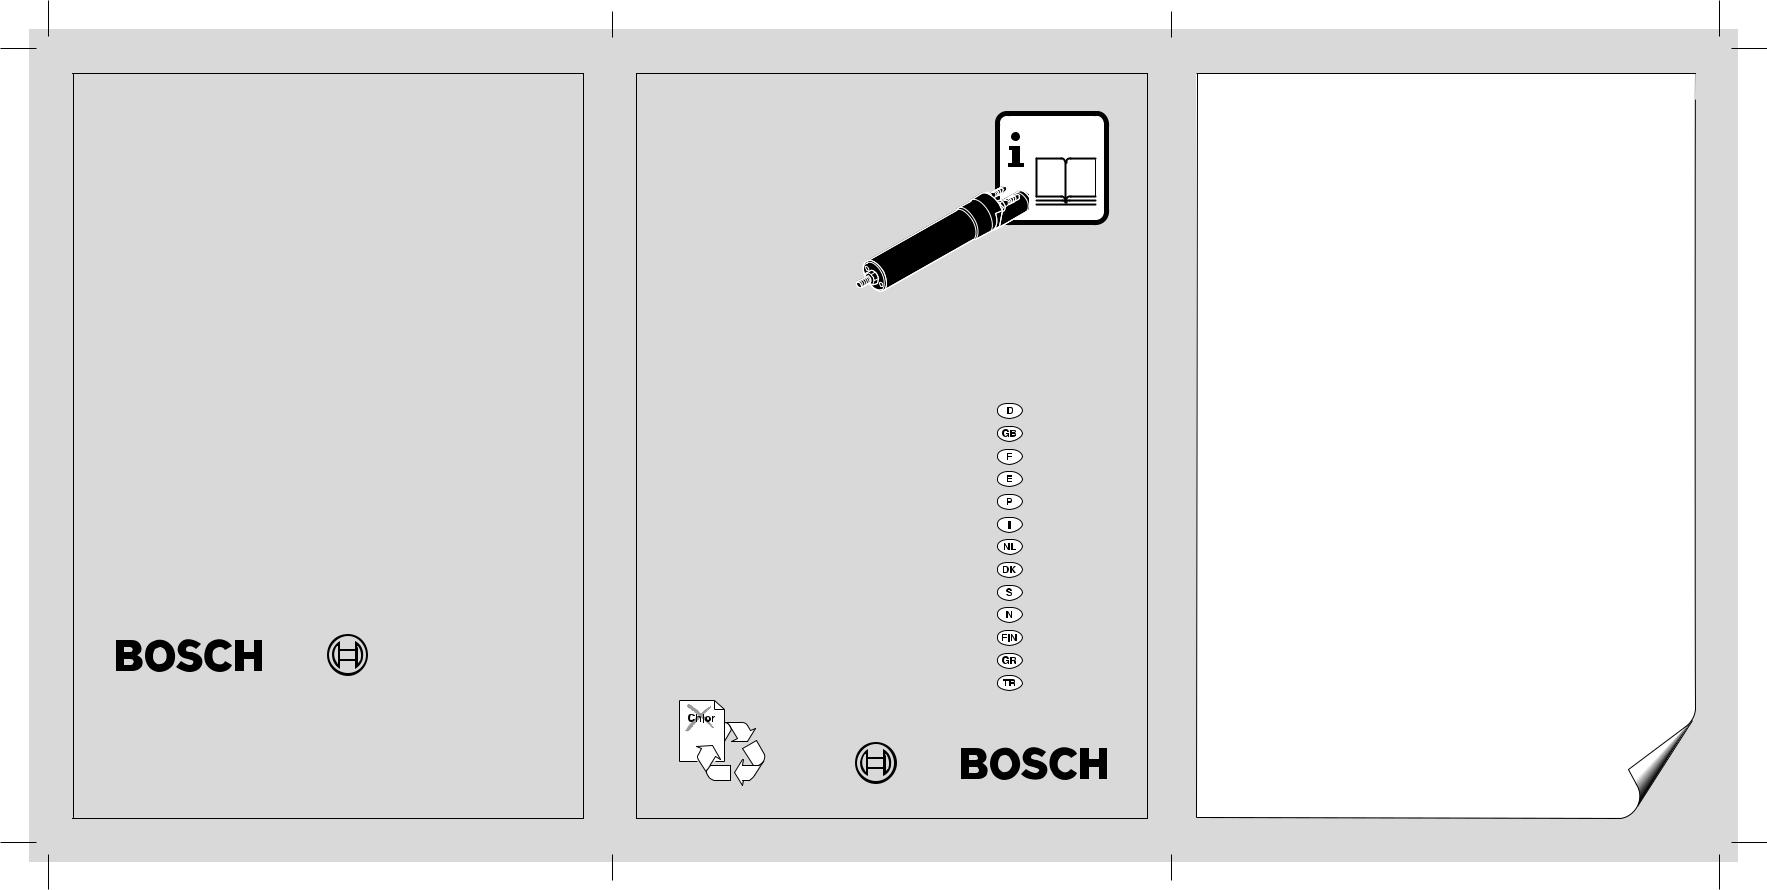 Bosch DL 0 607 953, DL 0 607 954 User Manual